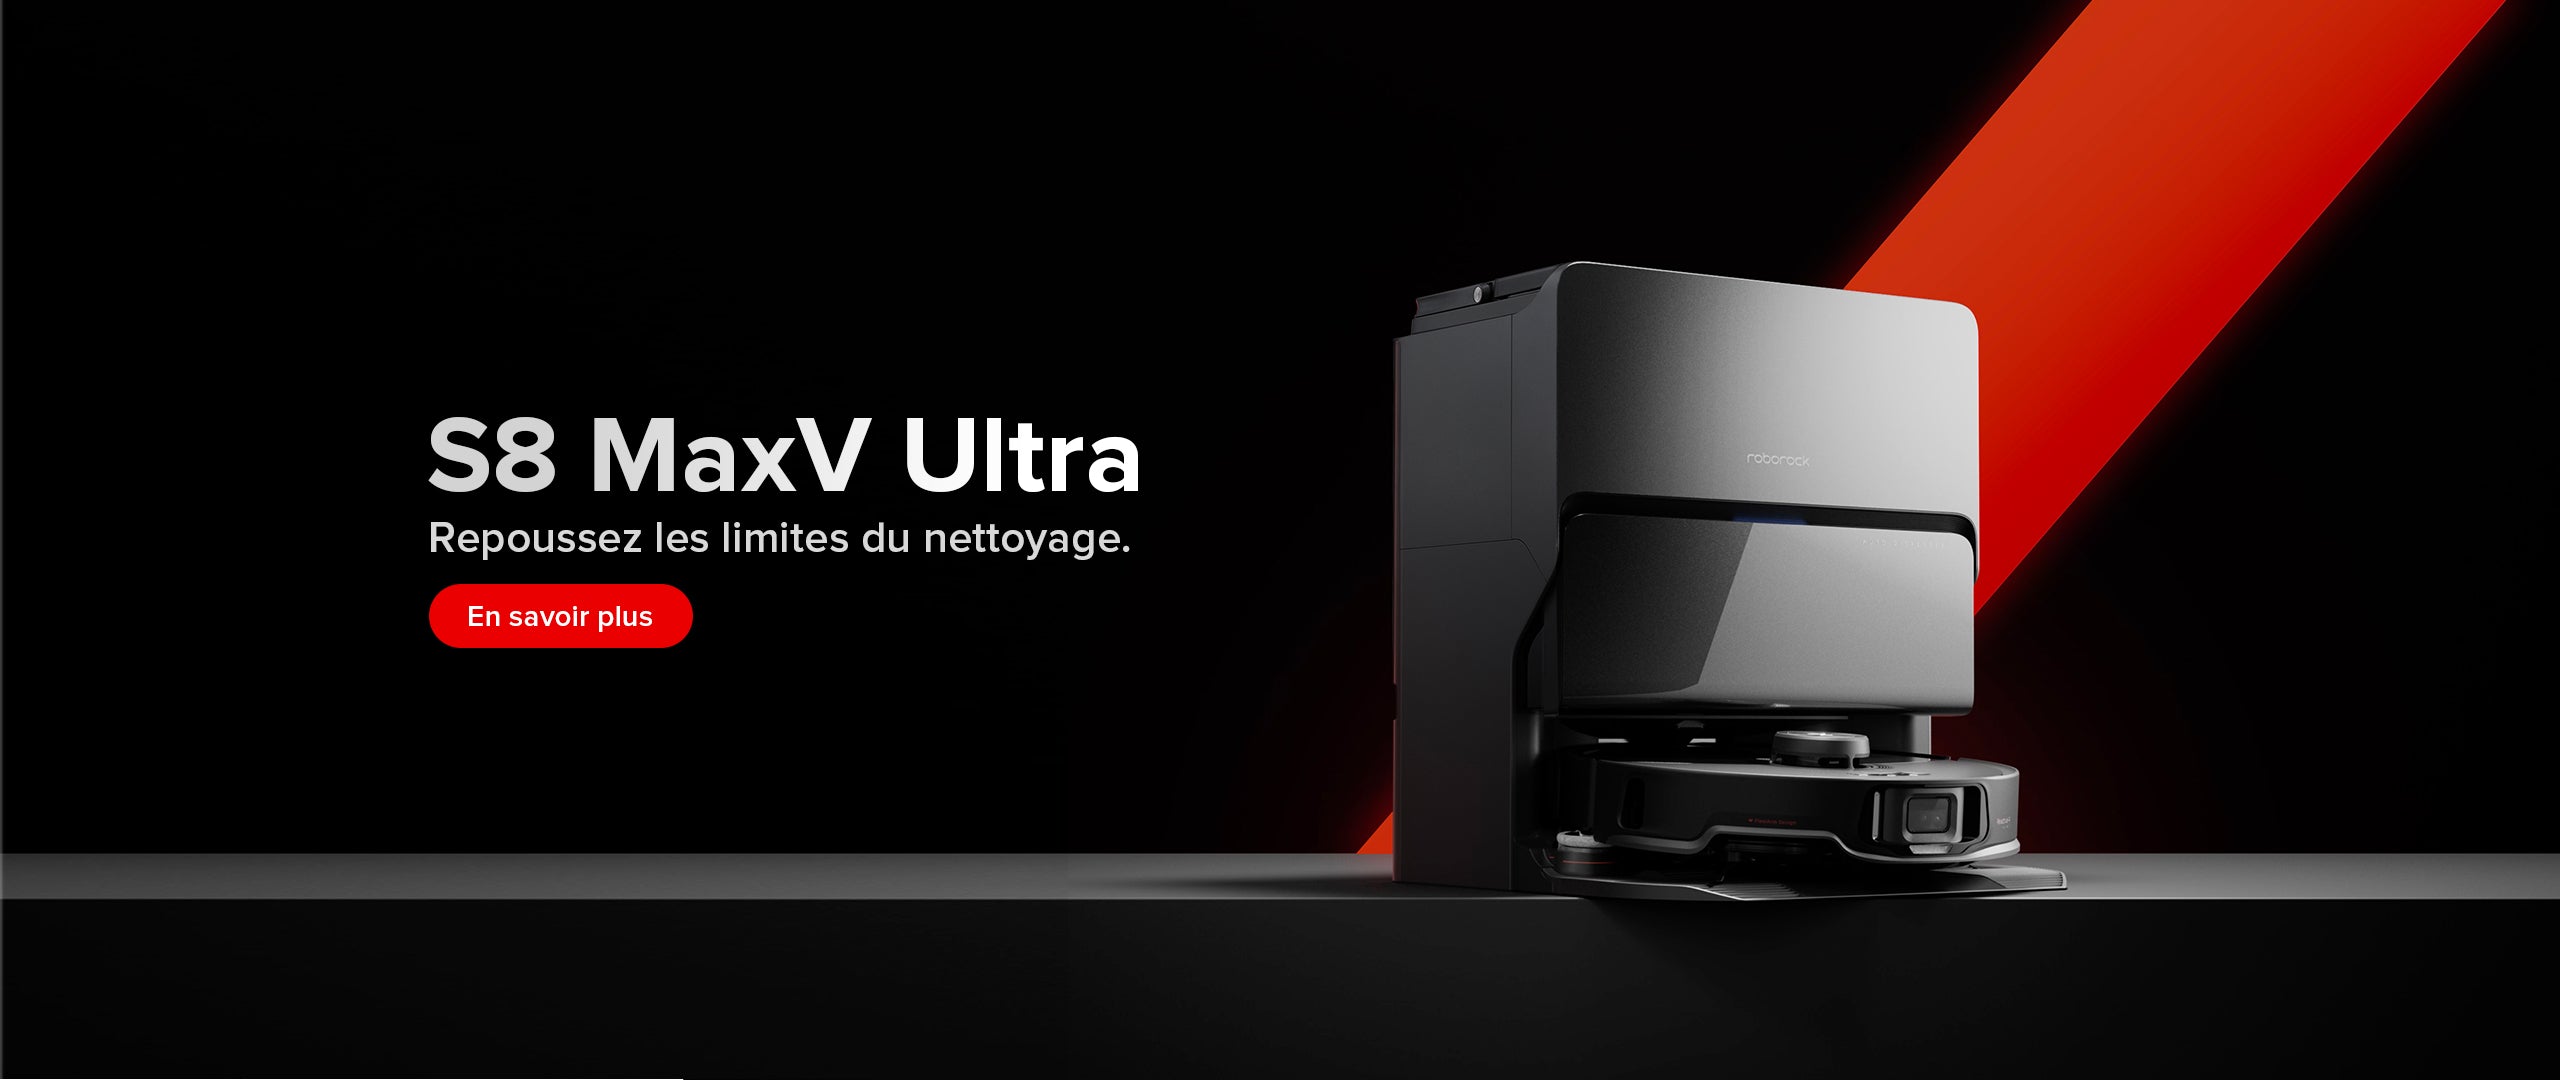 Roborock S8 MaxV Ultra